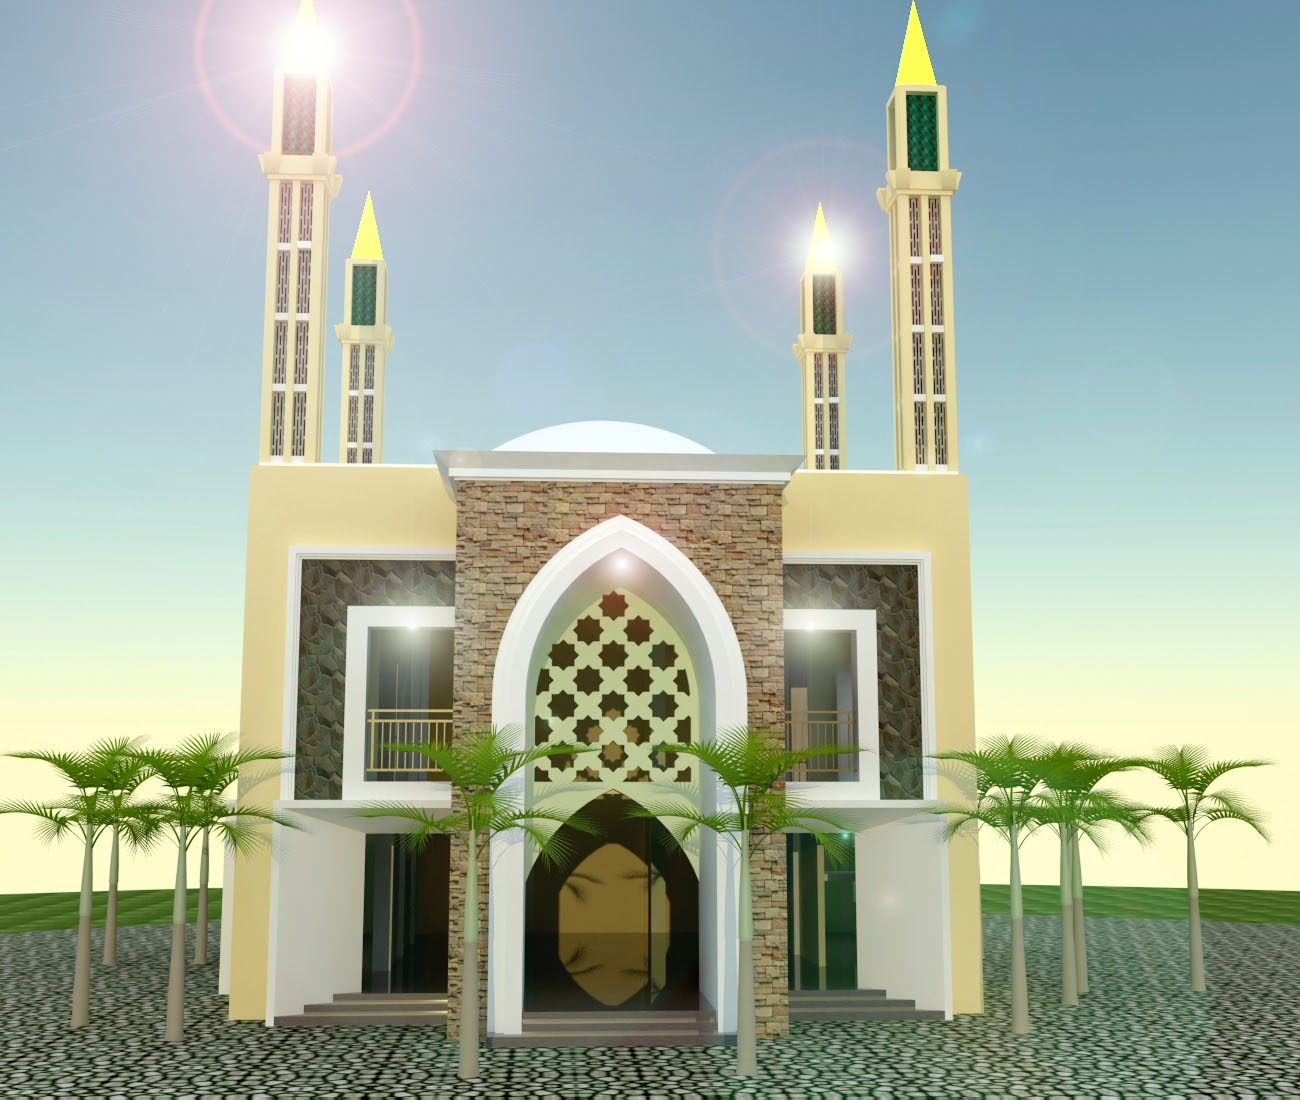  Gambar  Masjid  Minimalis  2  Lantai  Model Rumah 2022